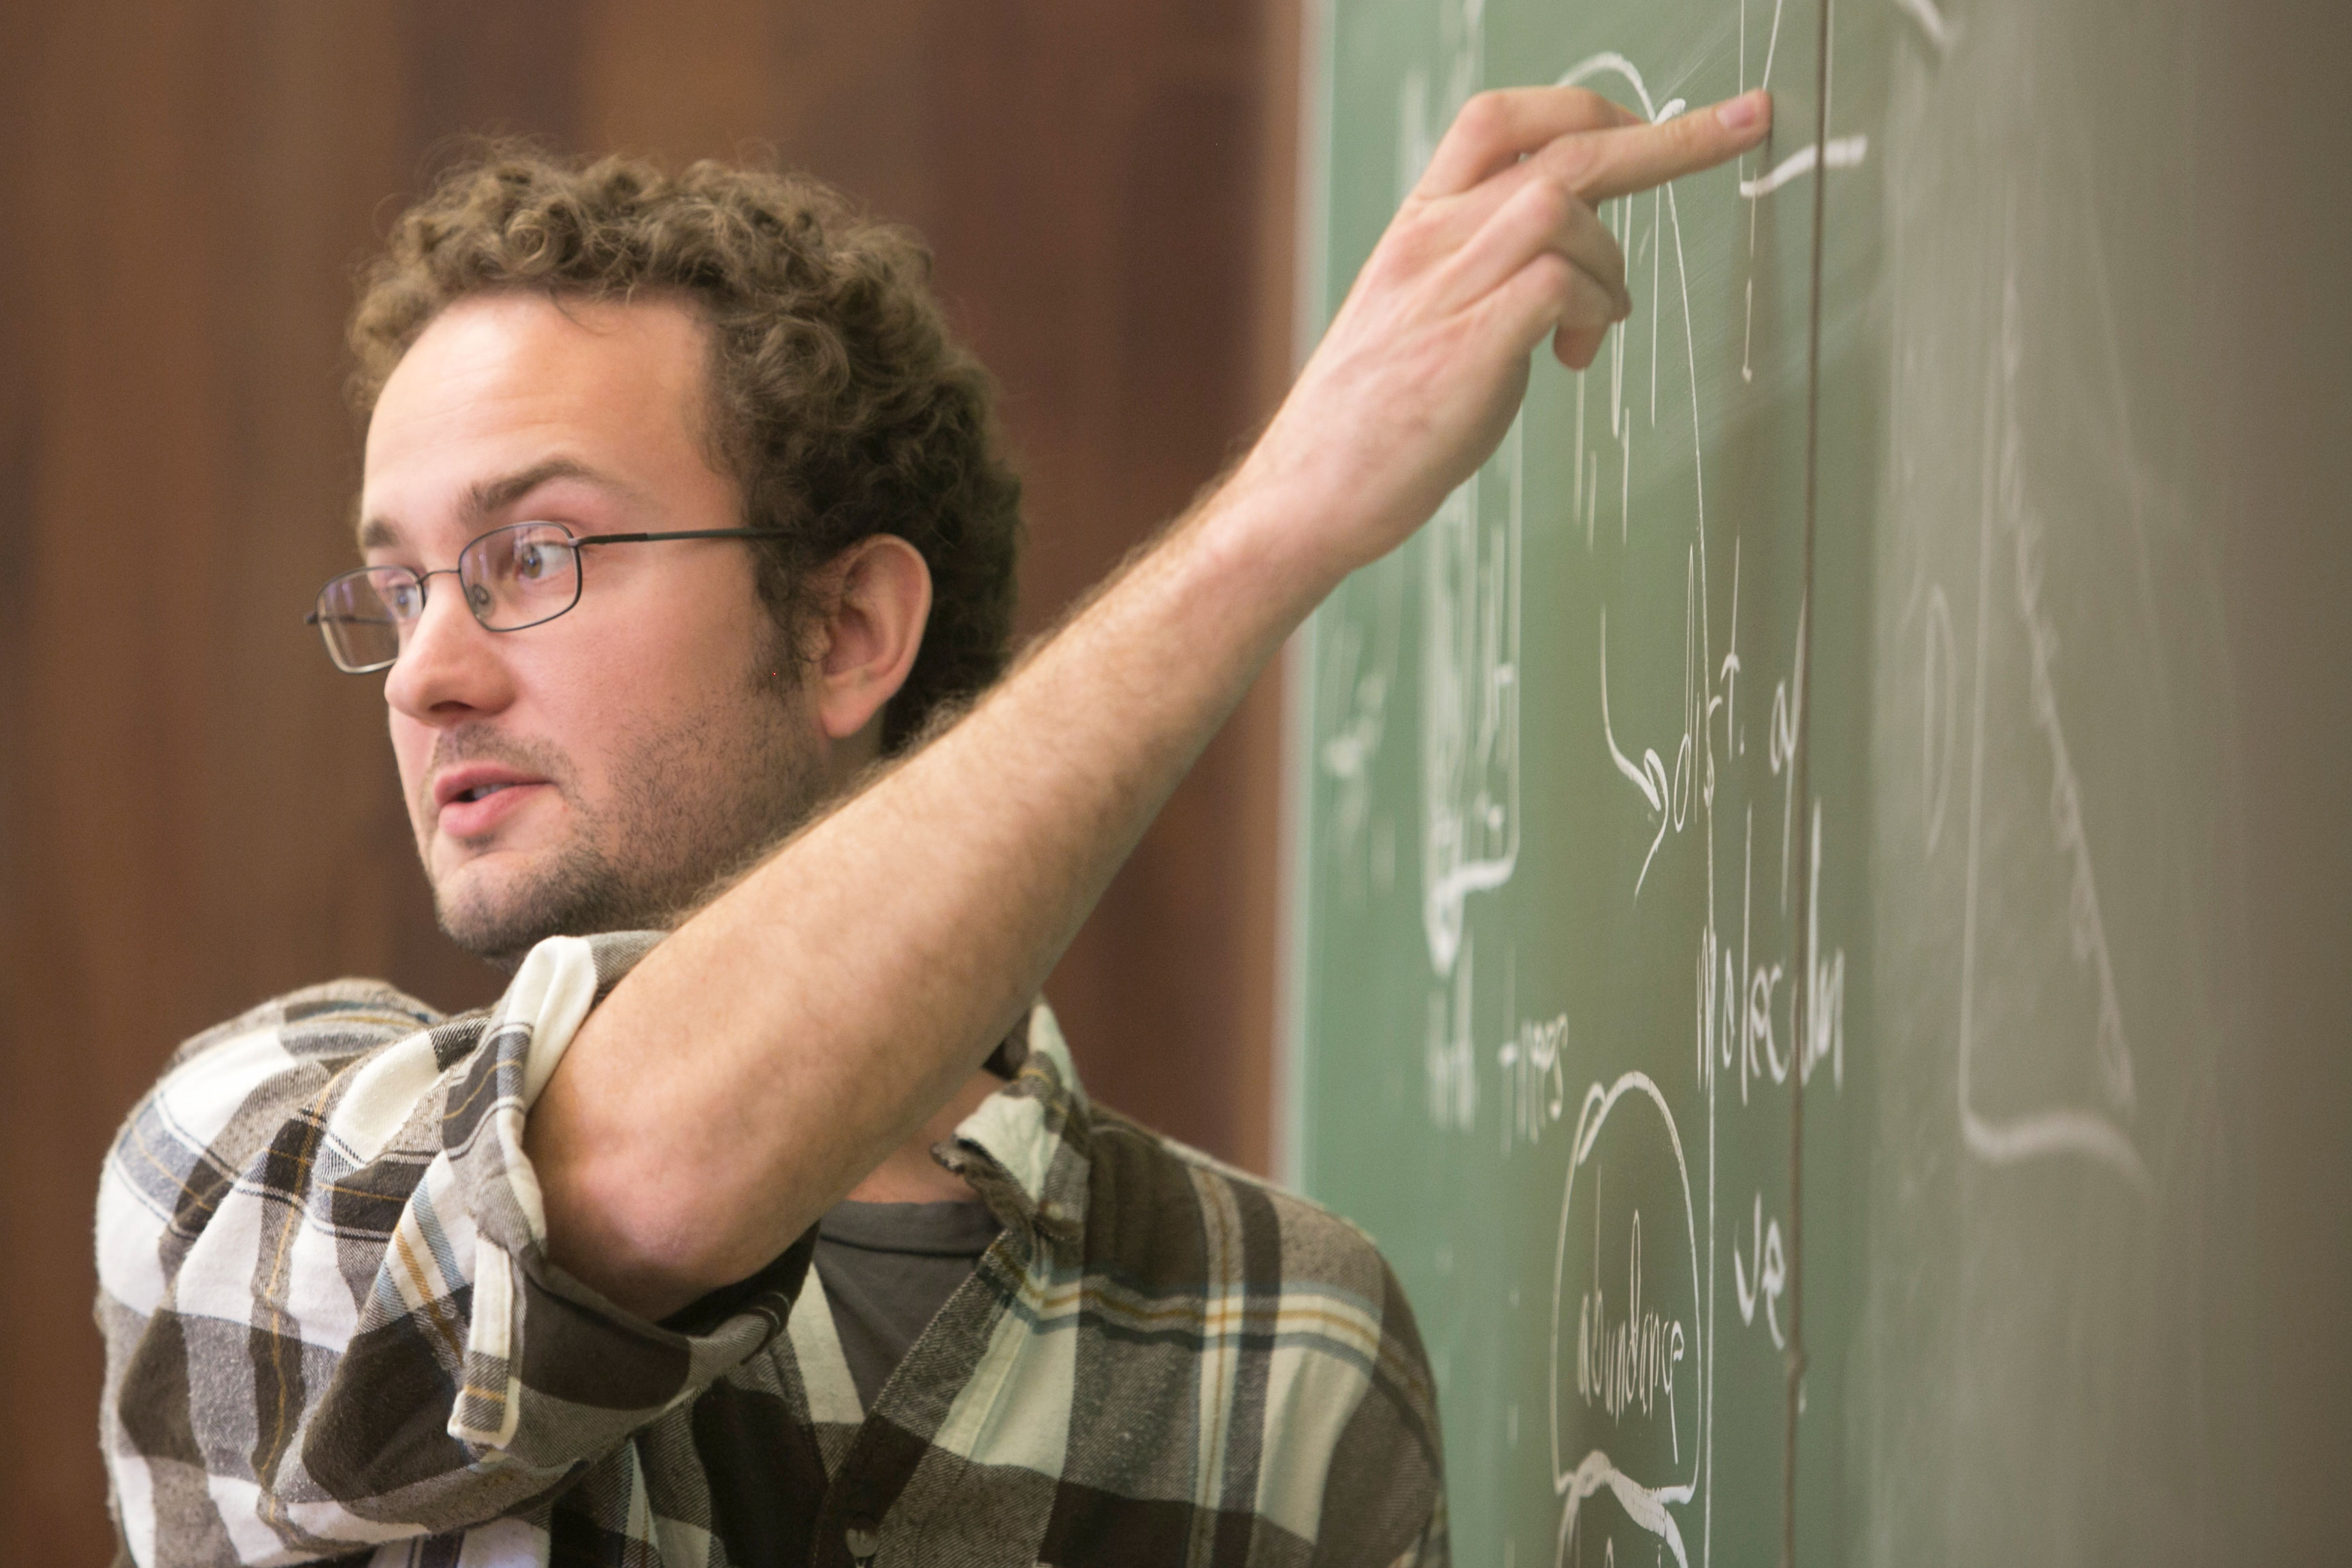 Image of Graduate Student Instructor at blackboard